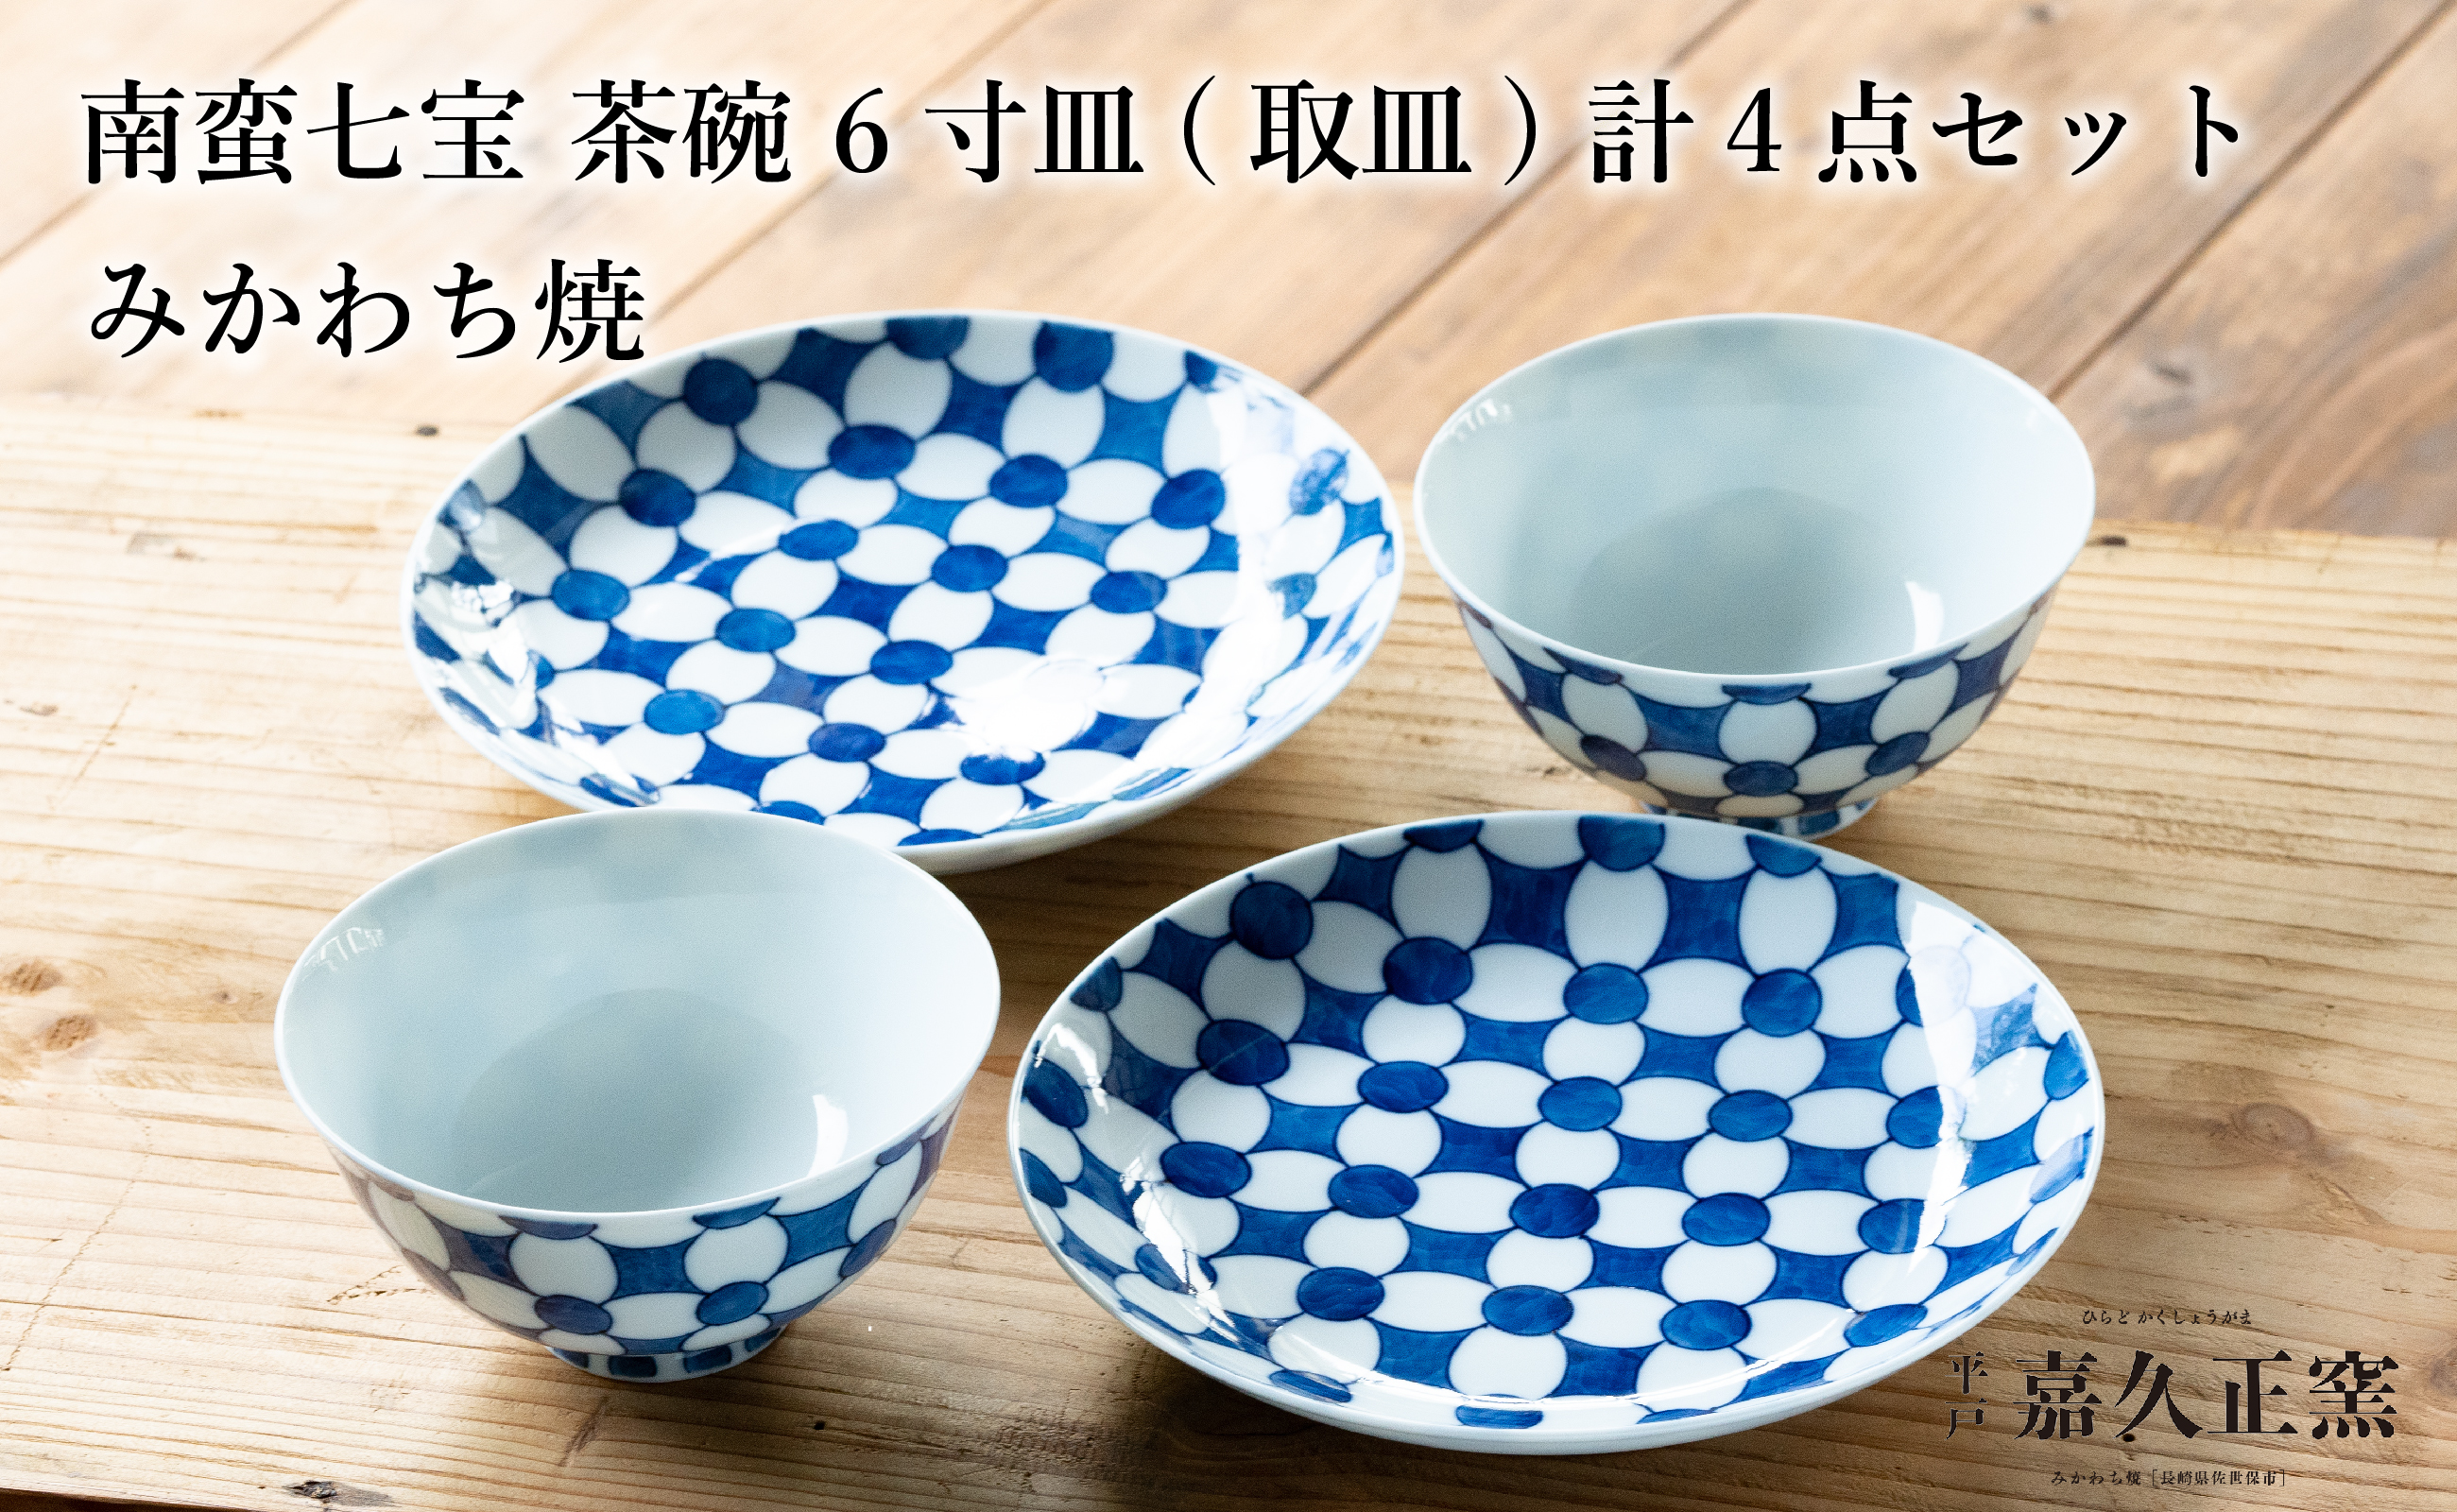 〈嘉久正窯〉南蛮七宝 茶碗 6寸皿 計4点セット  手描き 染付  飯碗 茶碗 ケーキ皿 パン皿 盛り皿 食器 皿